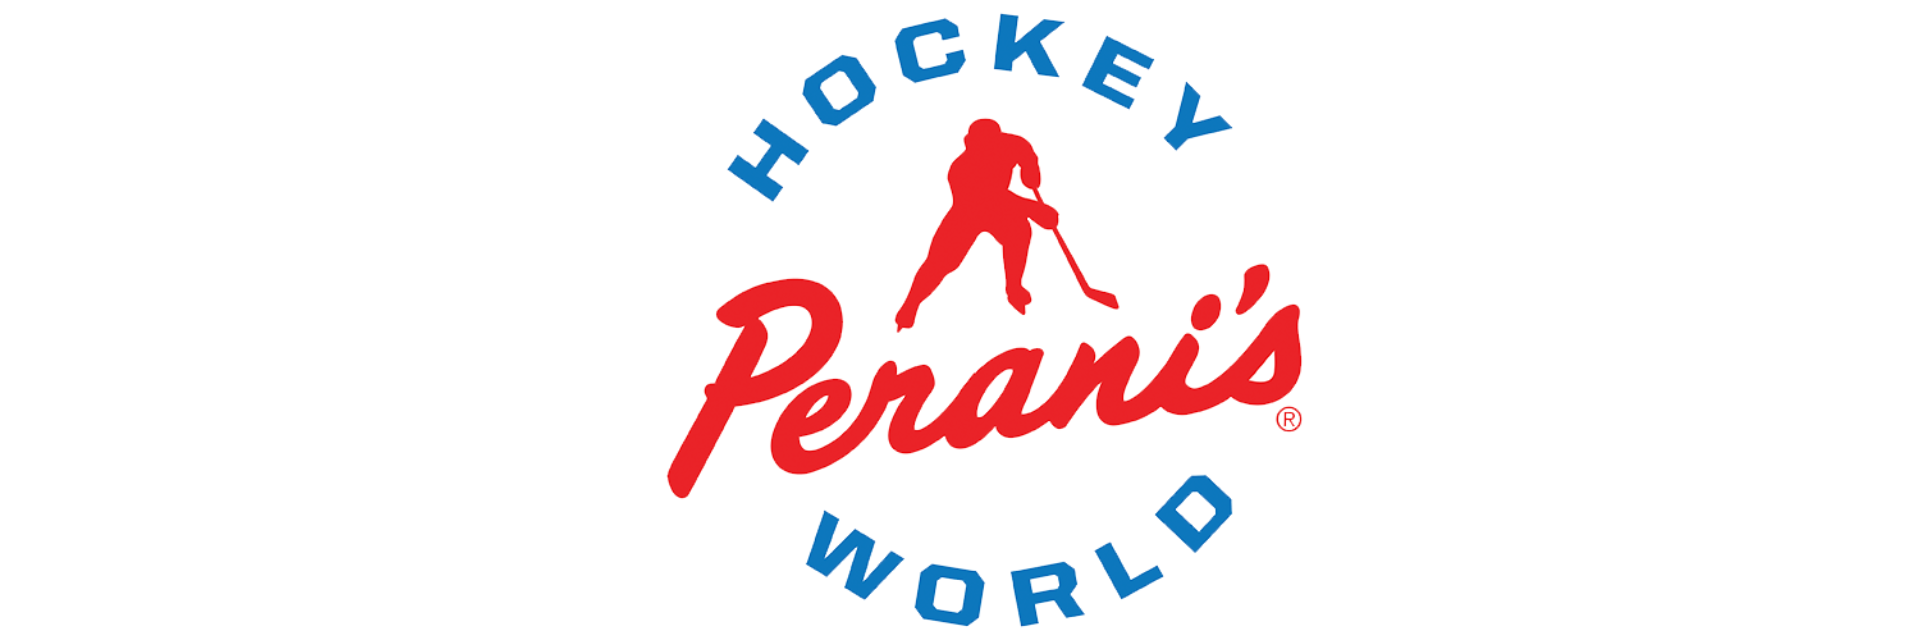 hockey world logo